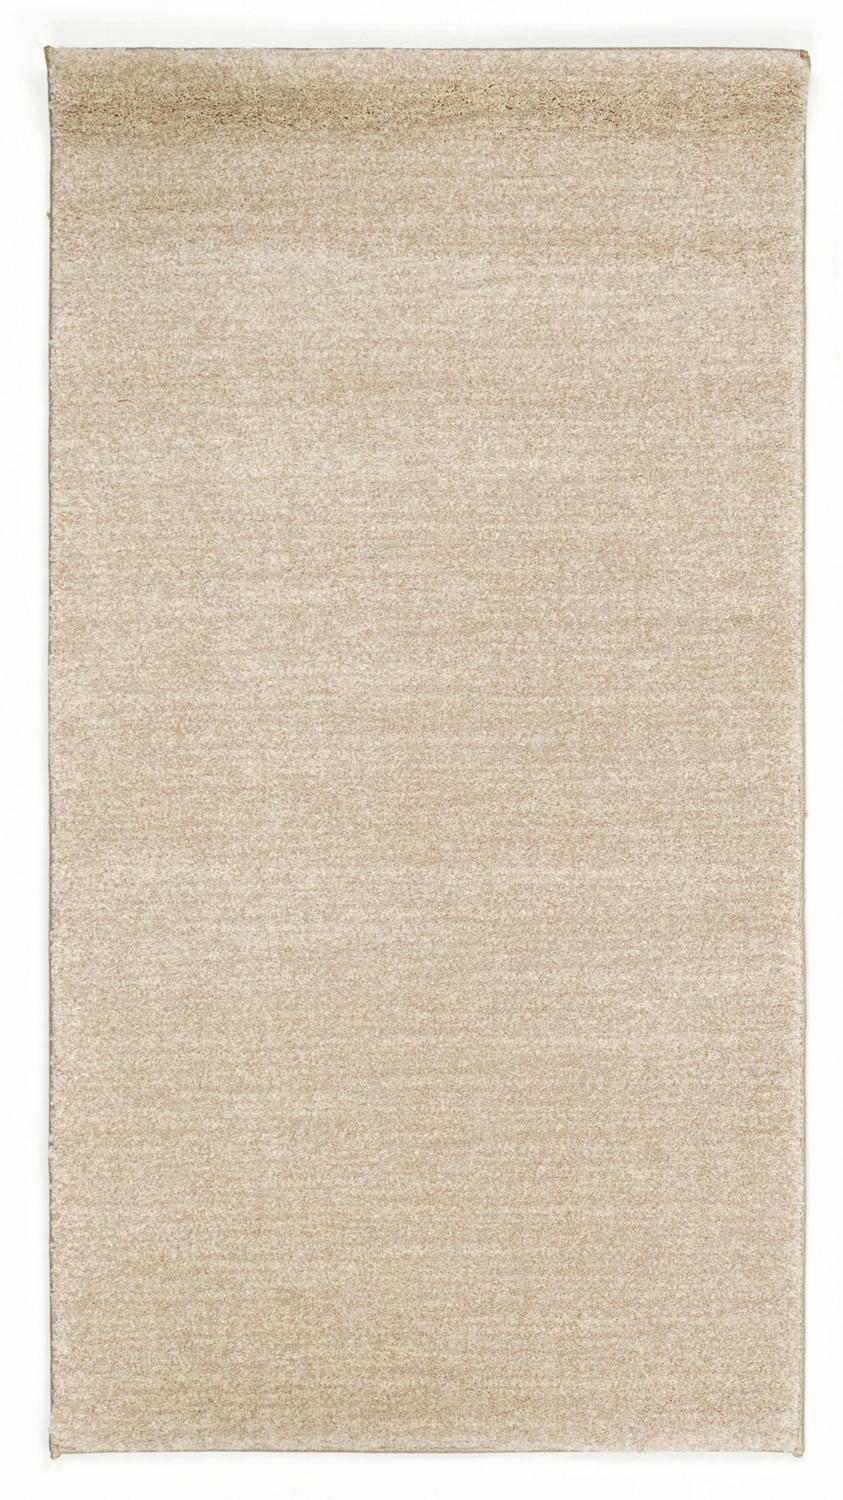 WEBTEPPICH 80/150 cm  - Sandfarben, Basics, Textil (80/150cm) - Novel